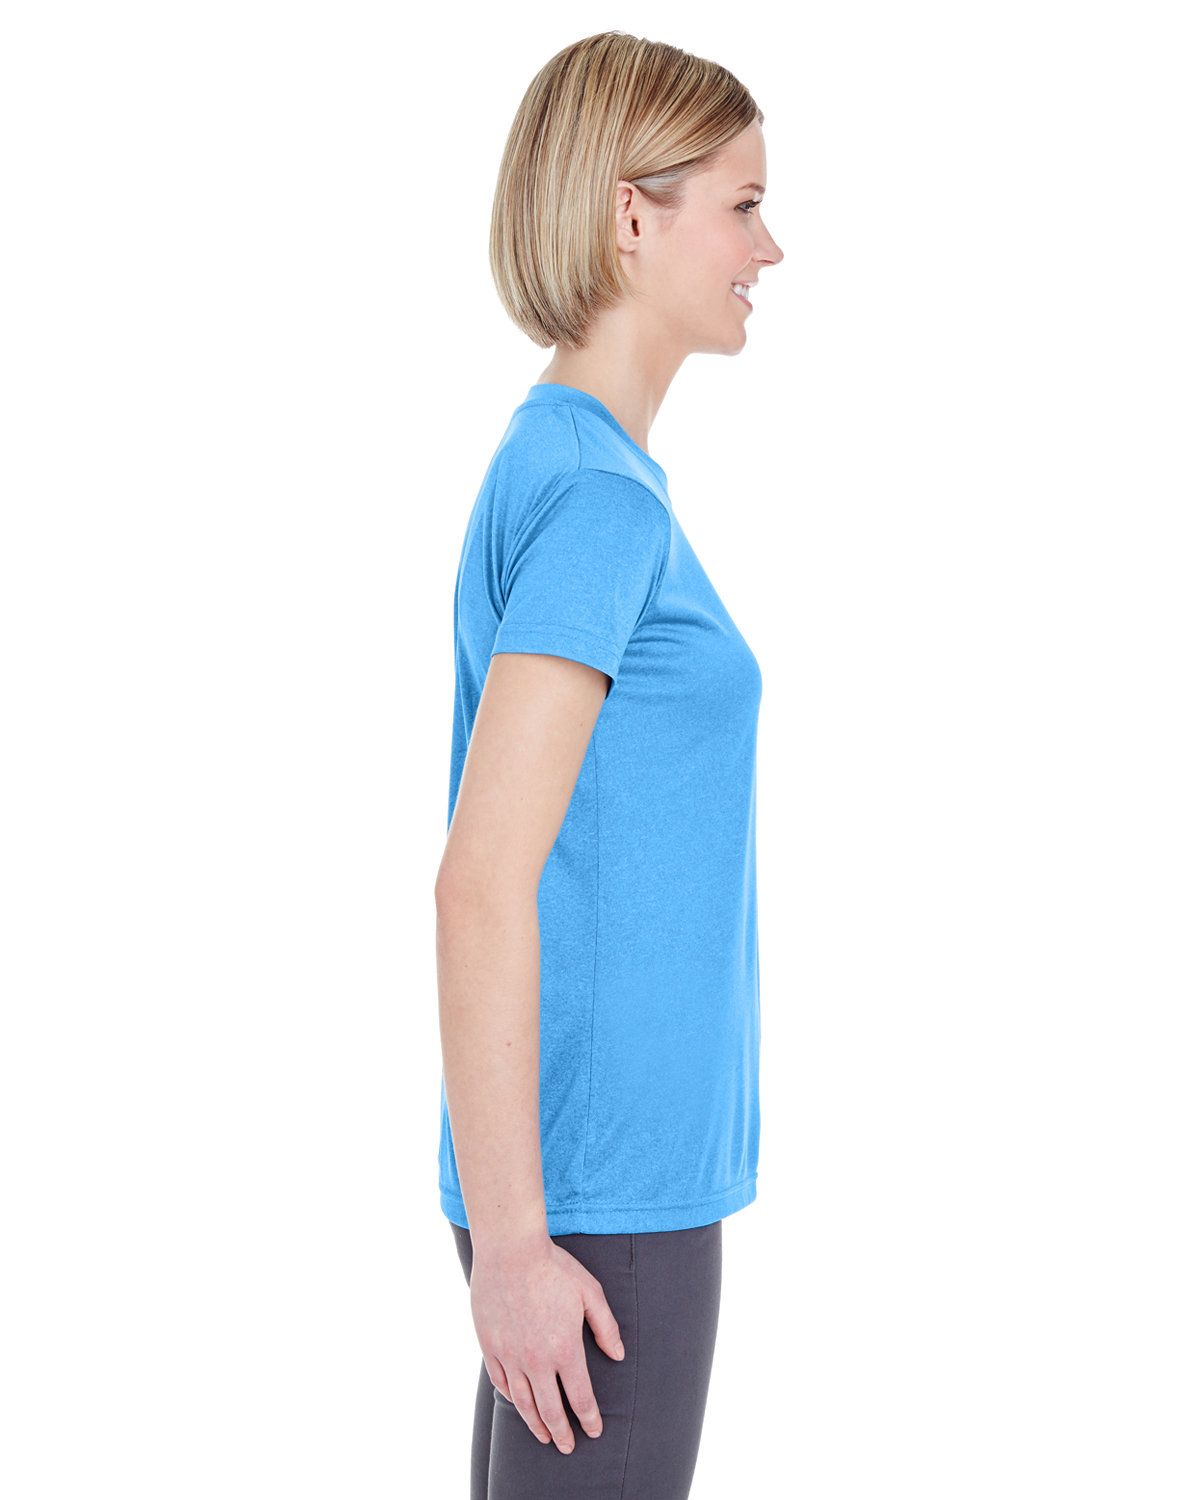 'UltraClub 8619L Ladies Cool & Dry Heathered Performance T-Shirt'